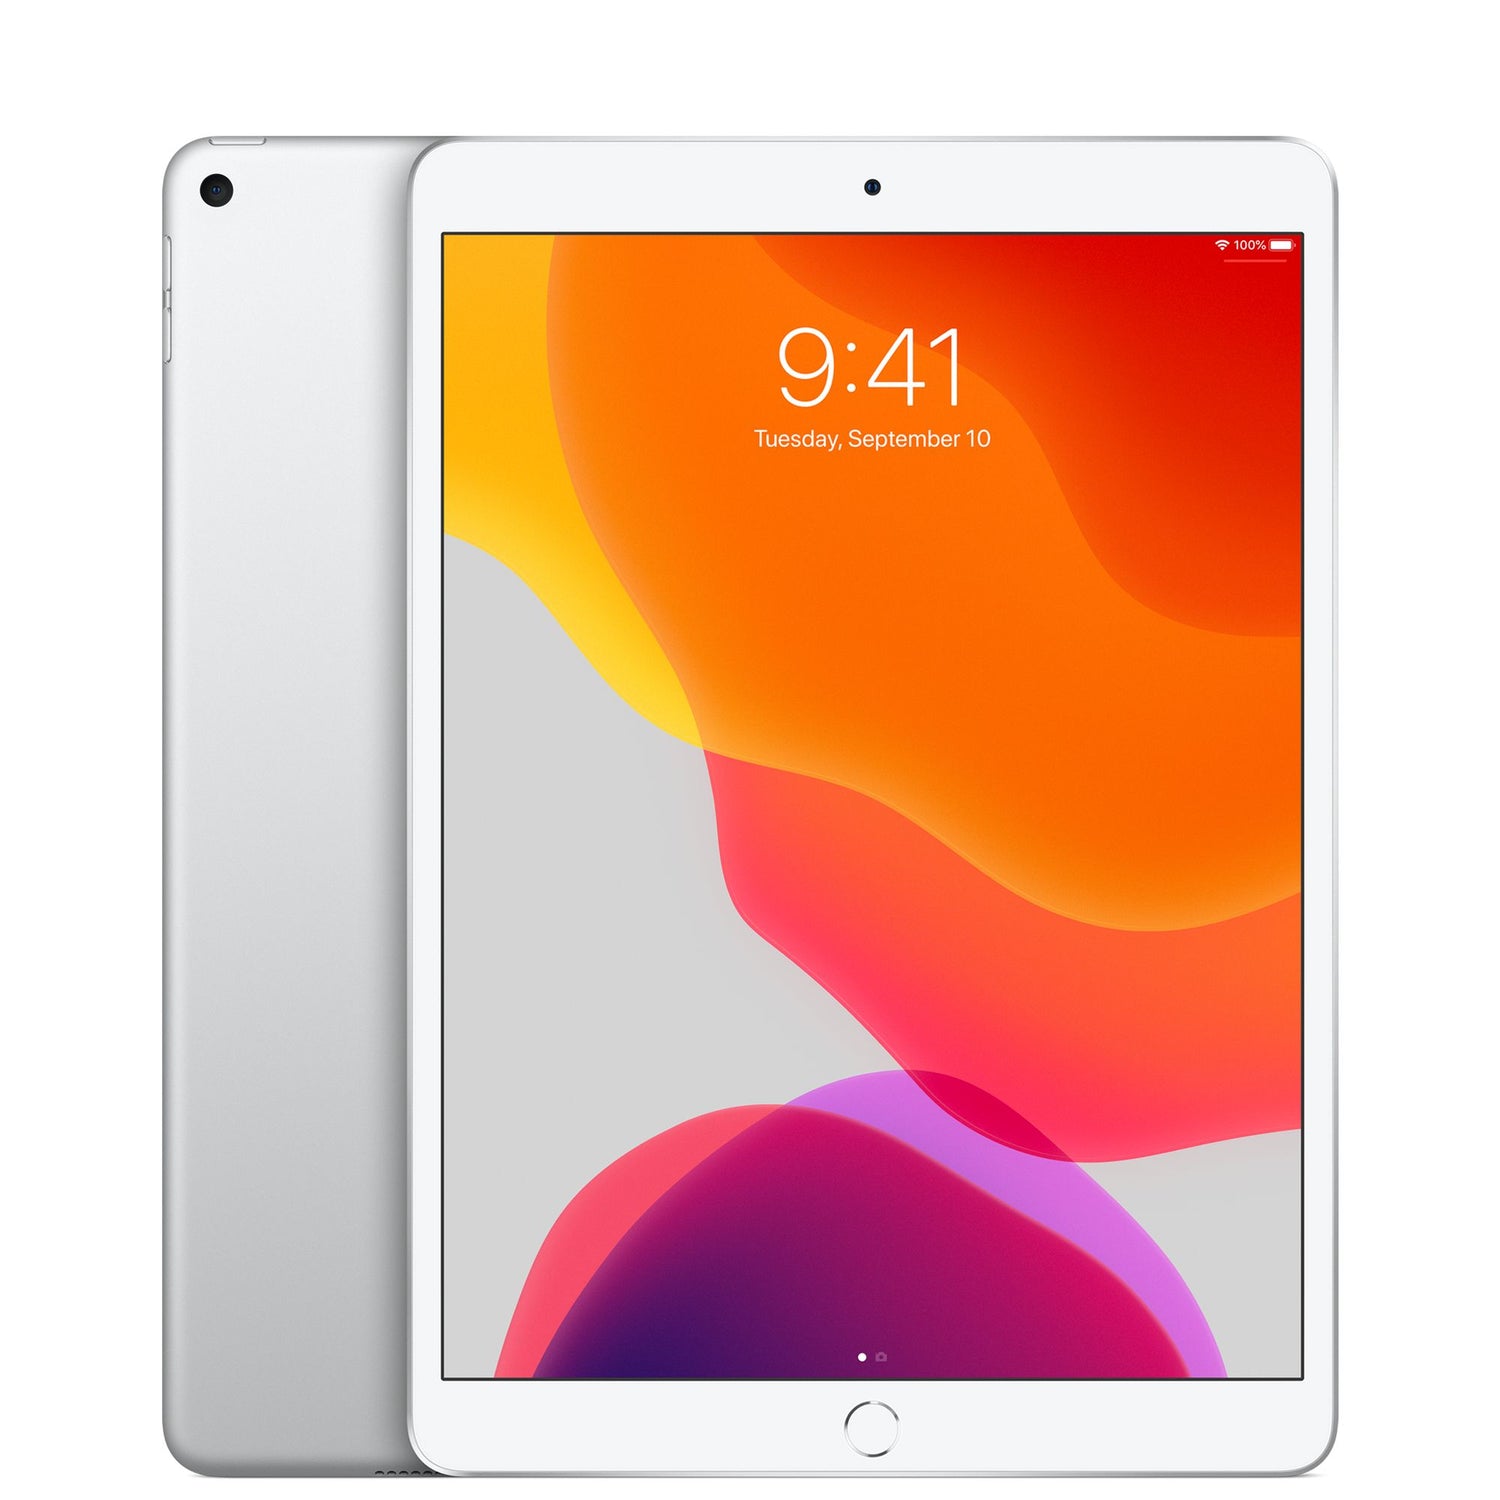 Apple iPad Air 2nd Gen, 9.7-inch, 64GB, WIFI + Unlocked All Carriers - Silver (Refurbished)